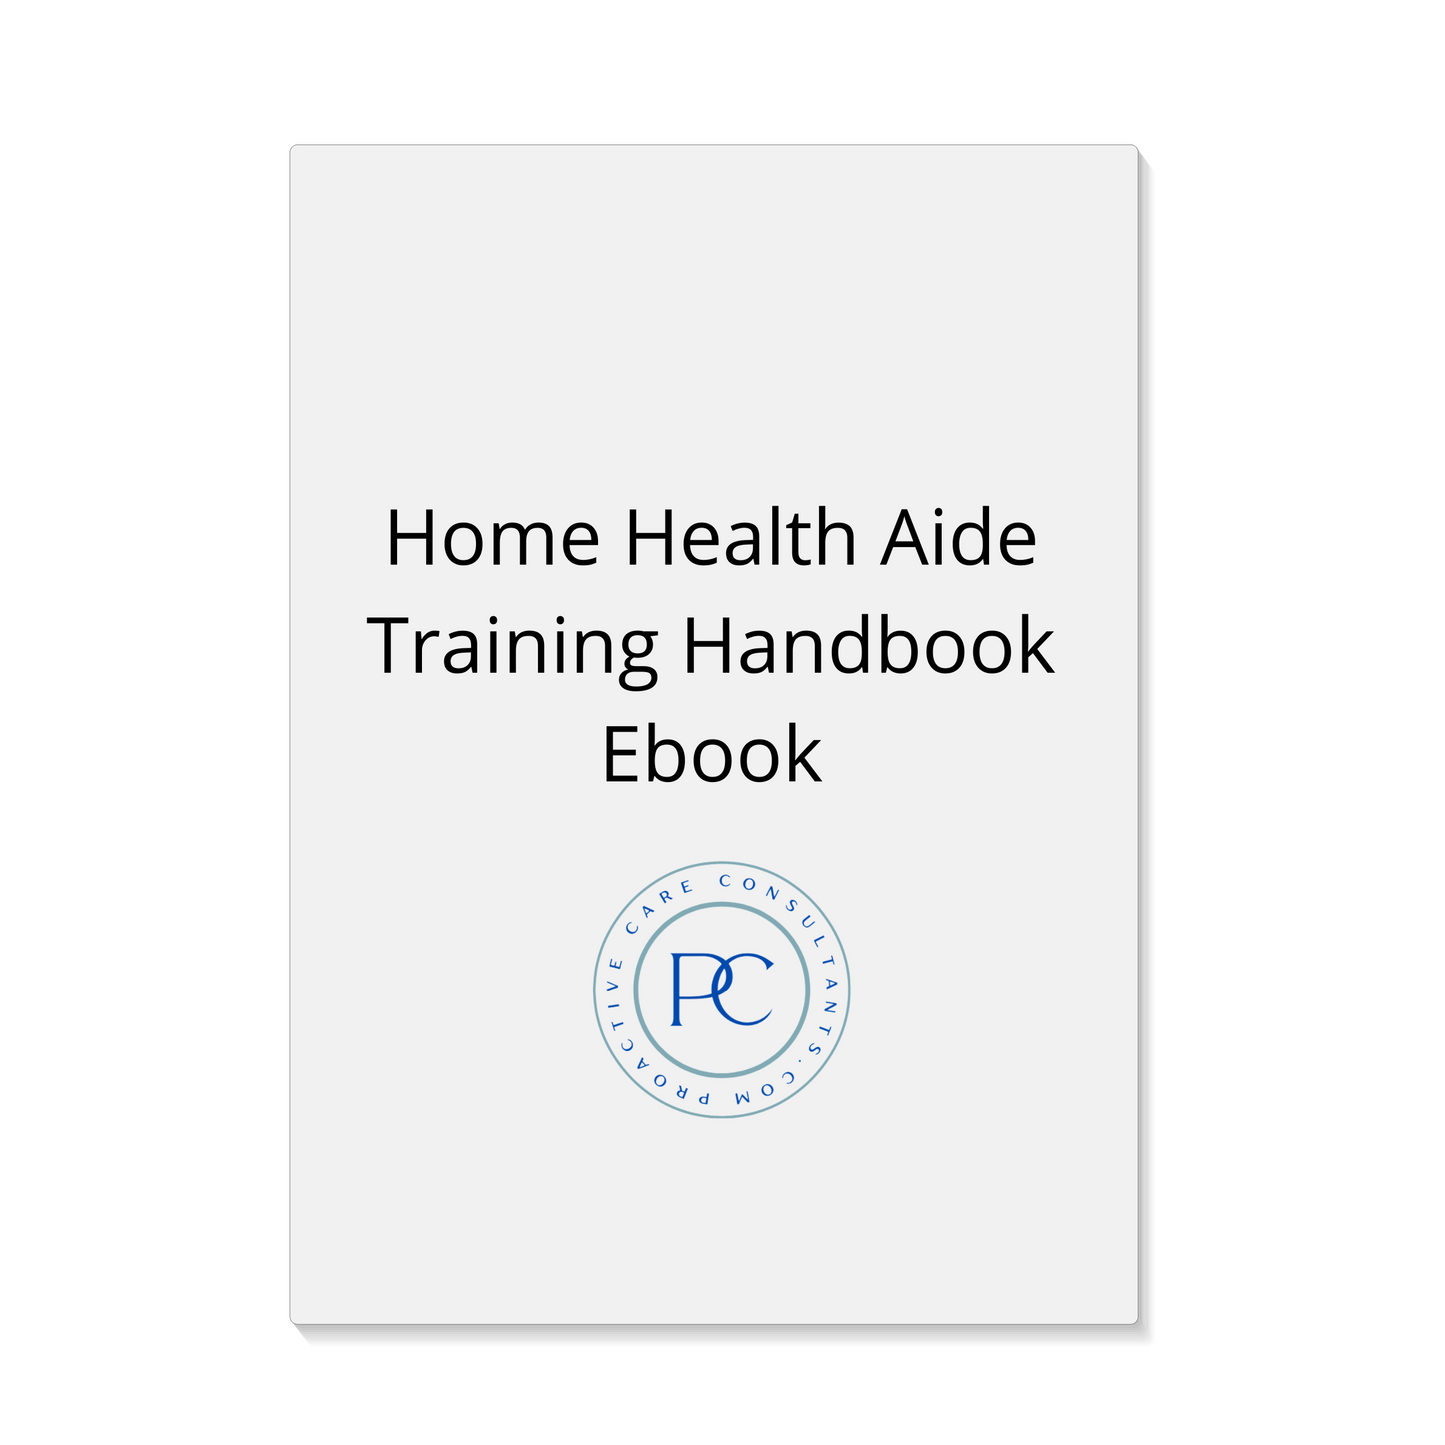 Home Health Aide Training Handbook eBook